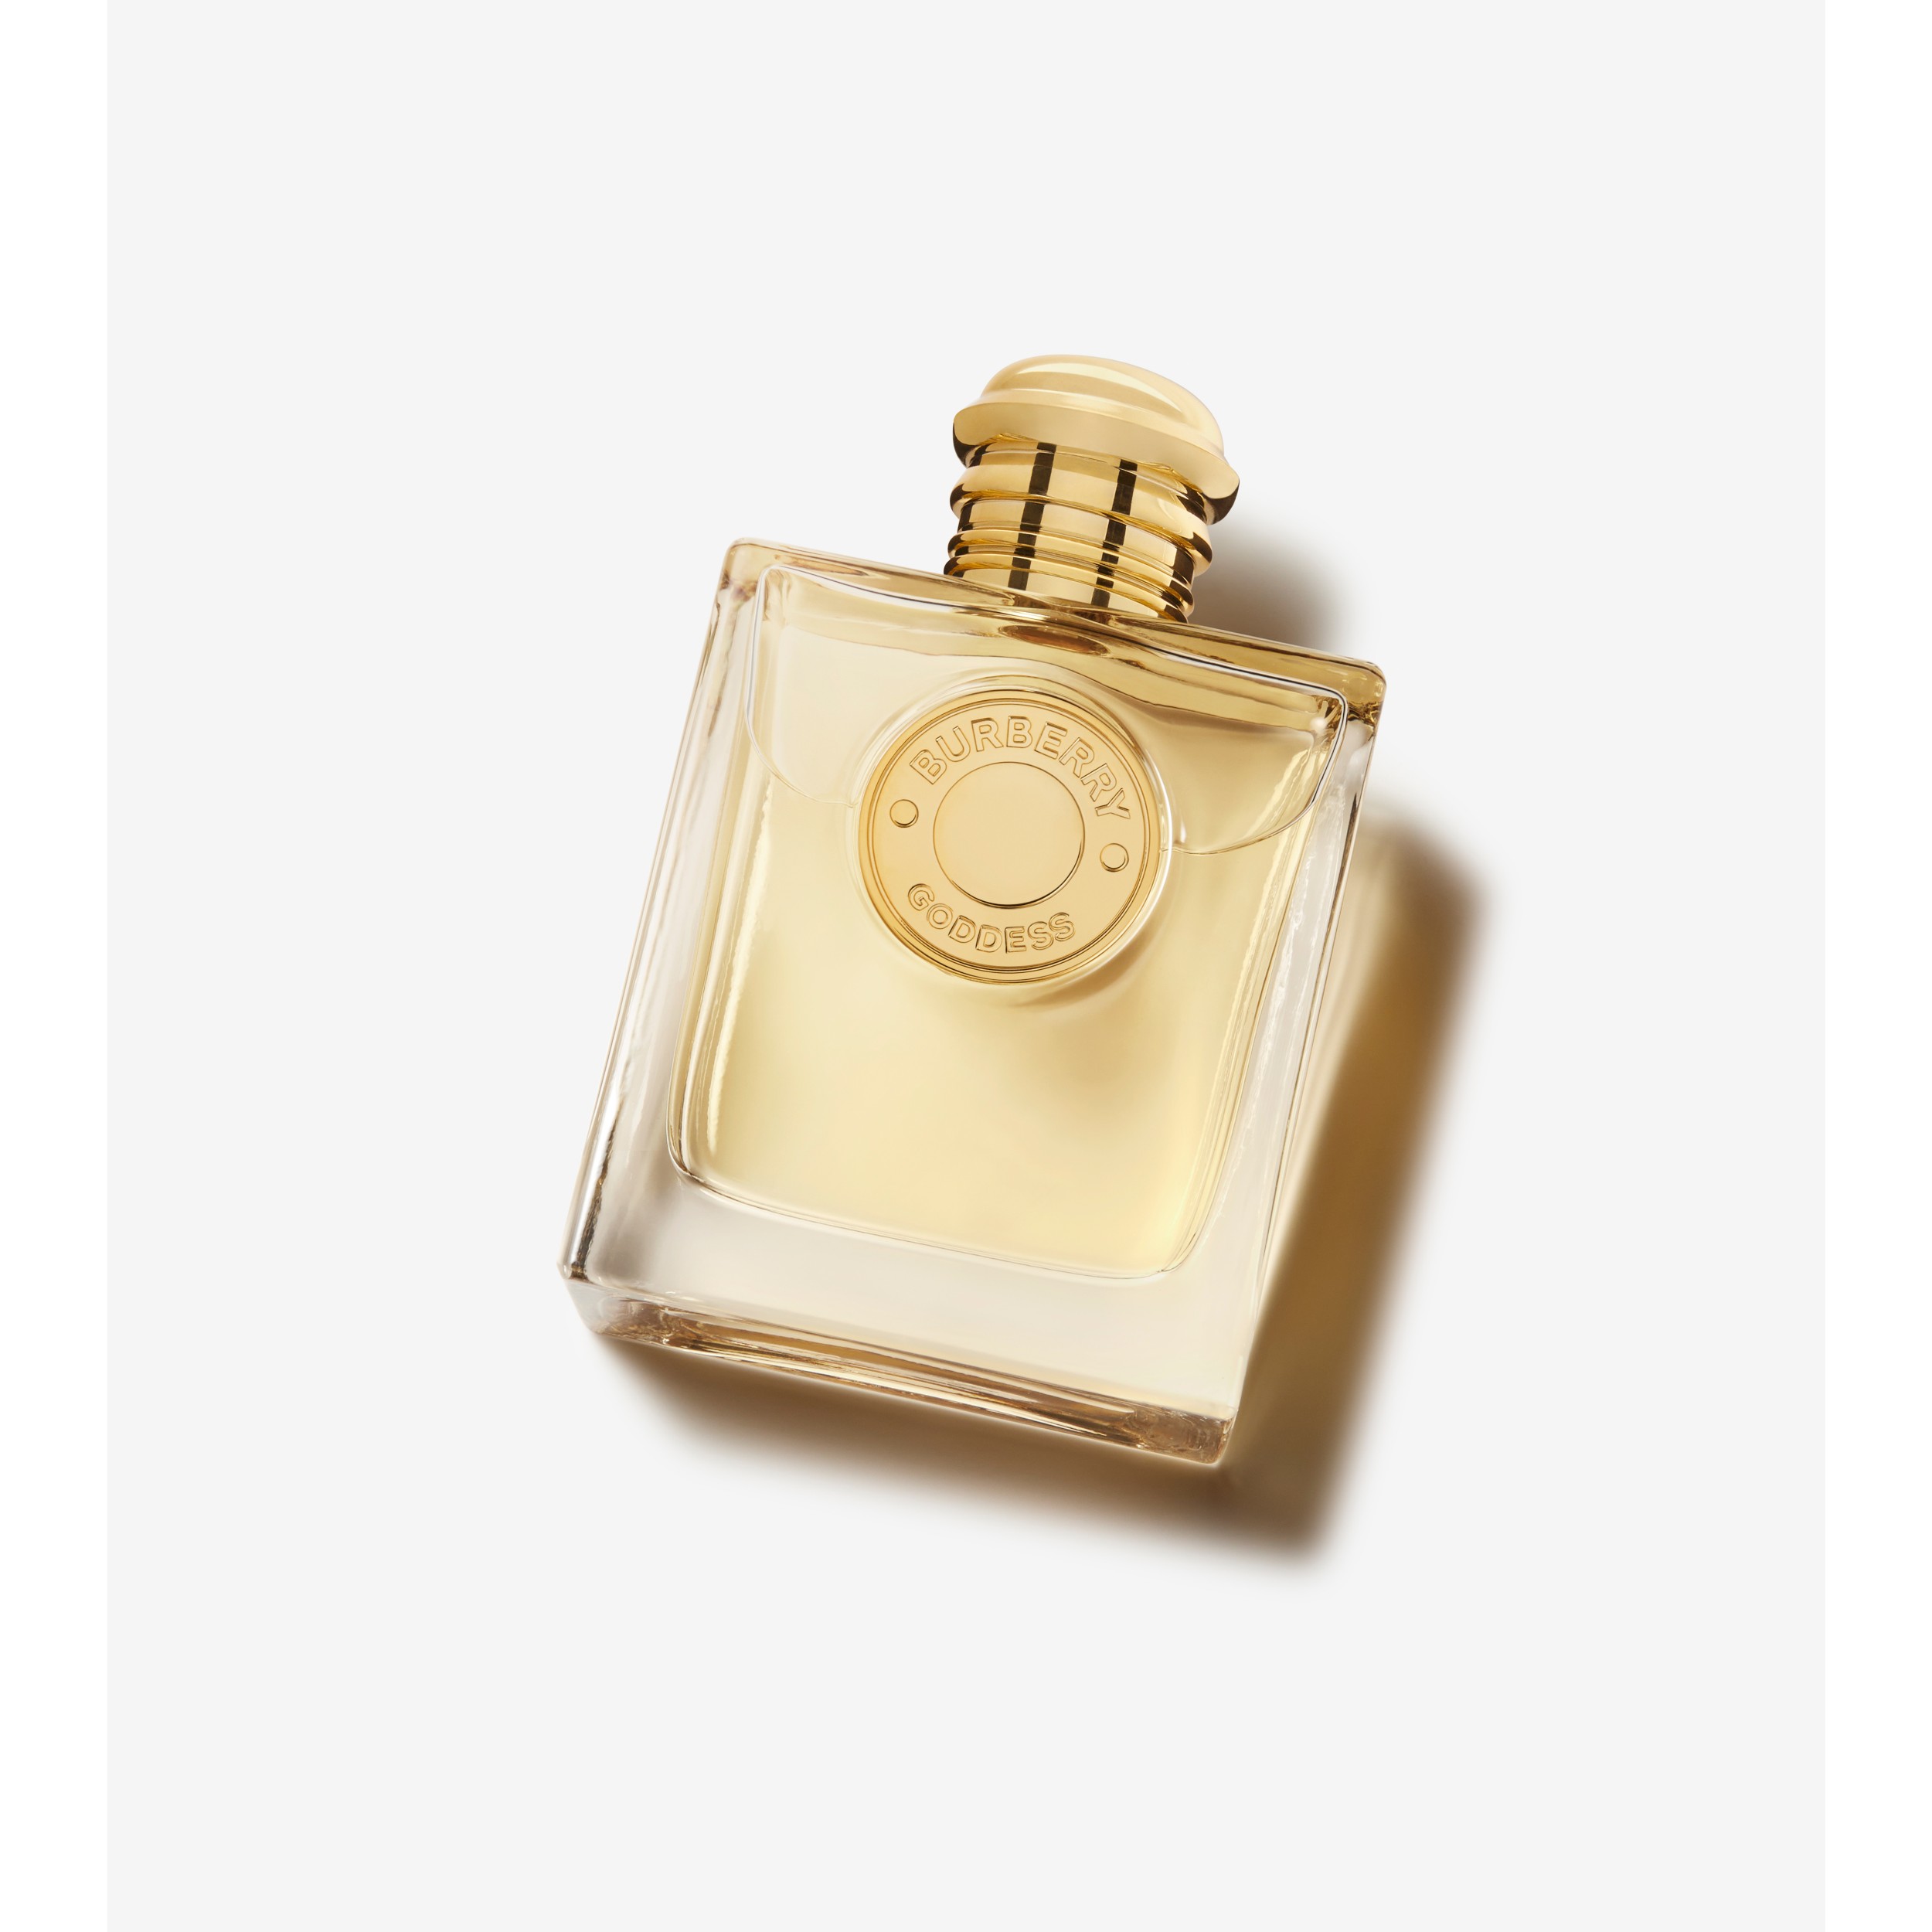 Perfume Chanel No 5 eau de parfum Chanel for women 100 ml hot sale original  fragrance high quality brand - AliExpress